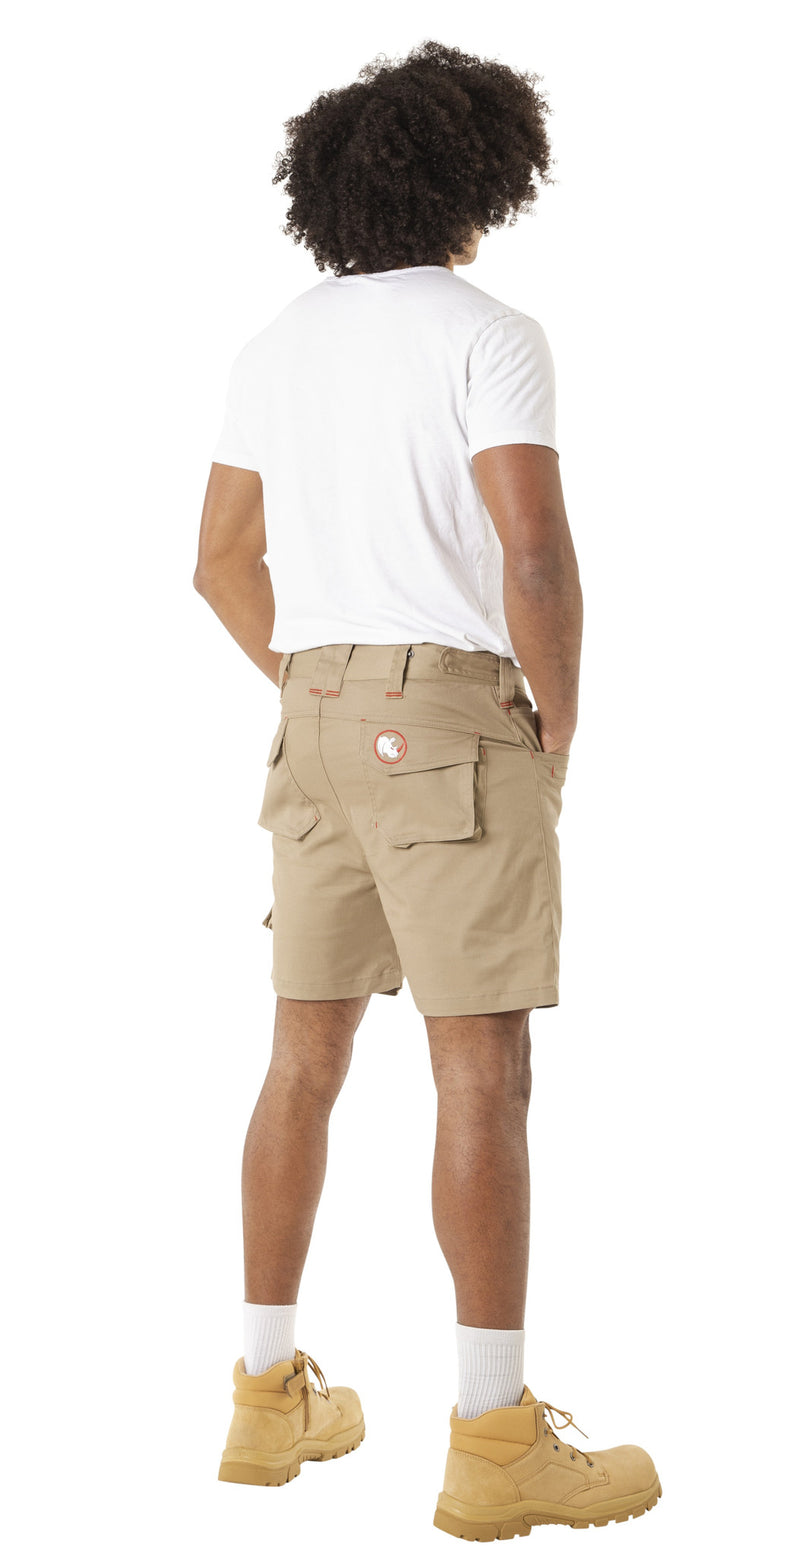 Mens Work Shorts Flexible Durable Tough - Beige Khaki [ SIZE 32 ]